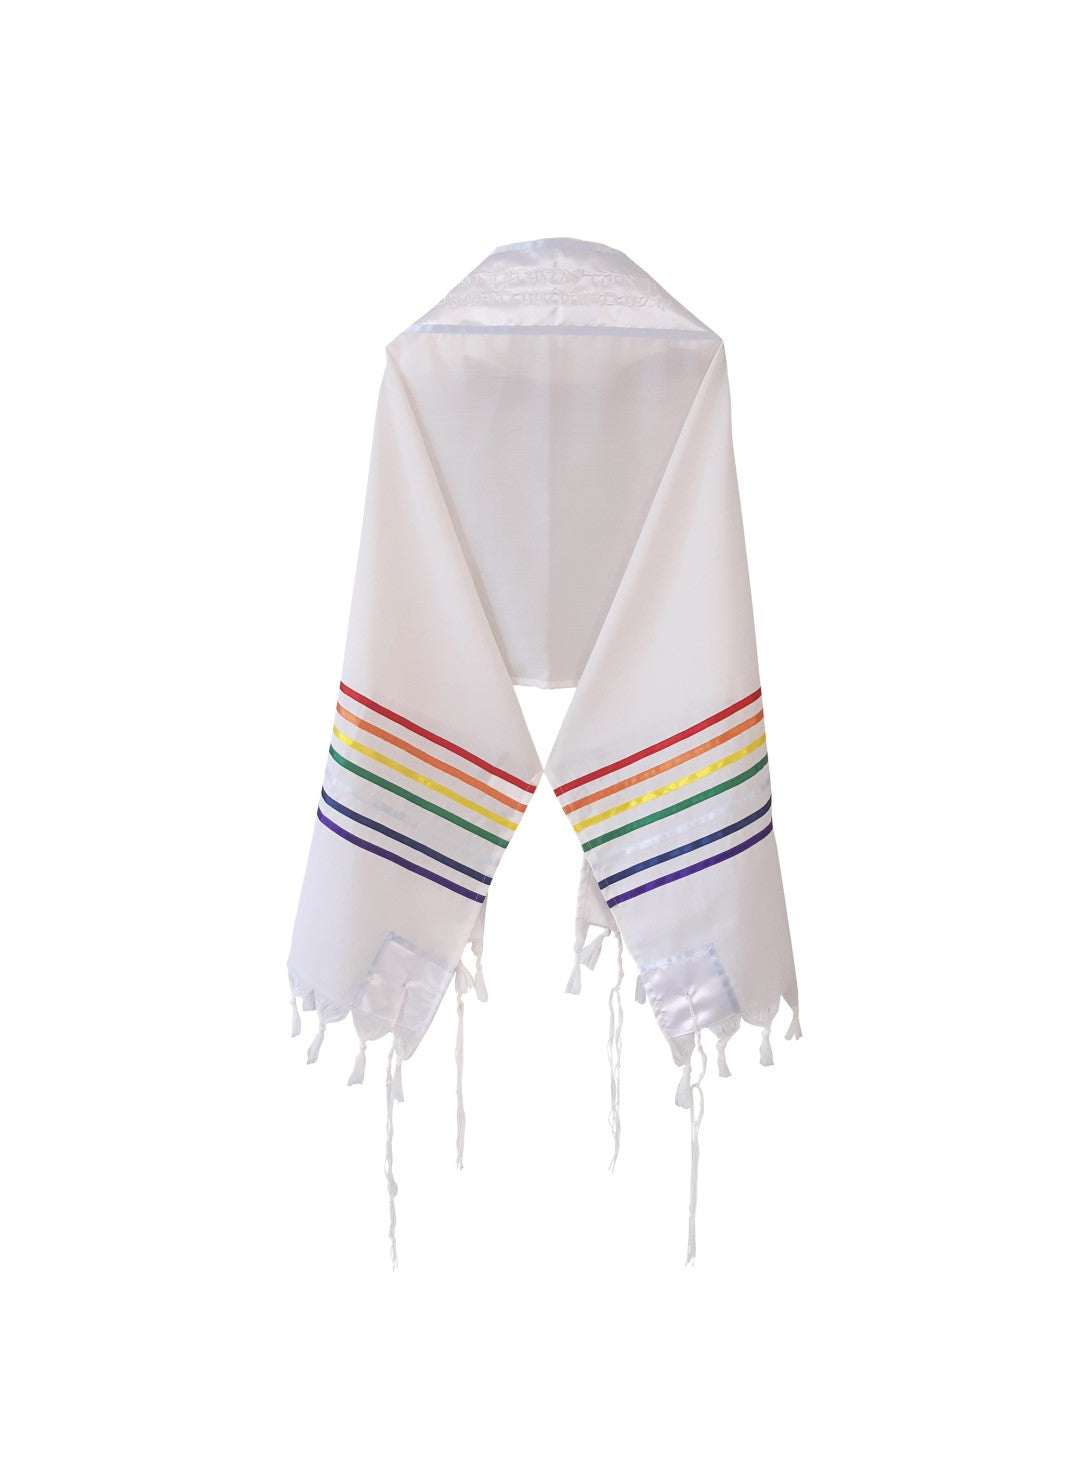 Handmade Wool Rainbow Tallit, Joseph's Coat of Many Colors Tallis, Bar Mitzvah Tallit Set, Talit for Man, Tzitzit back